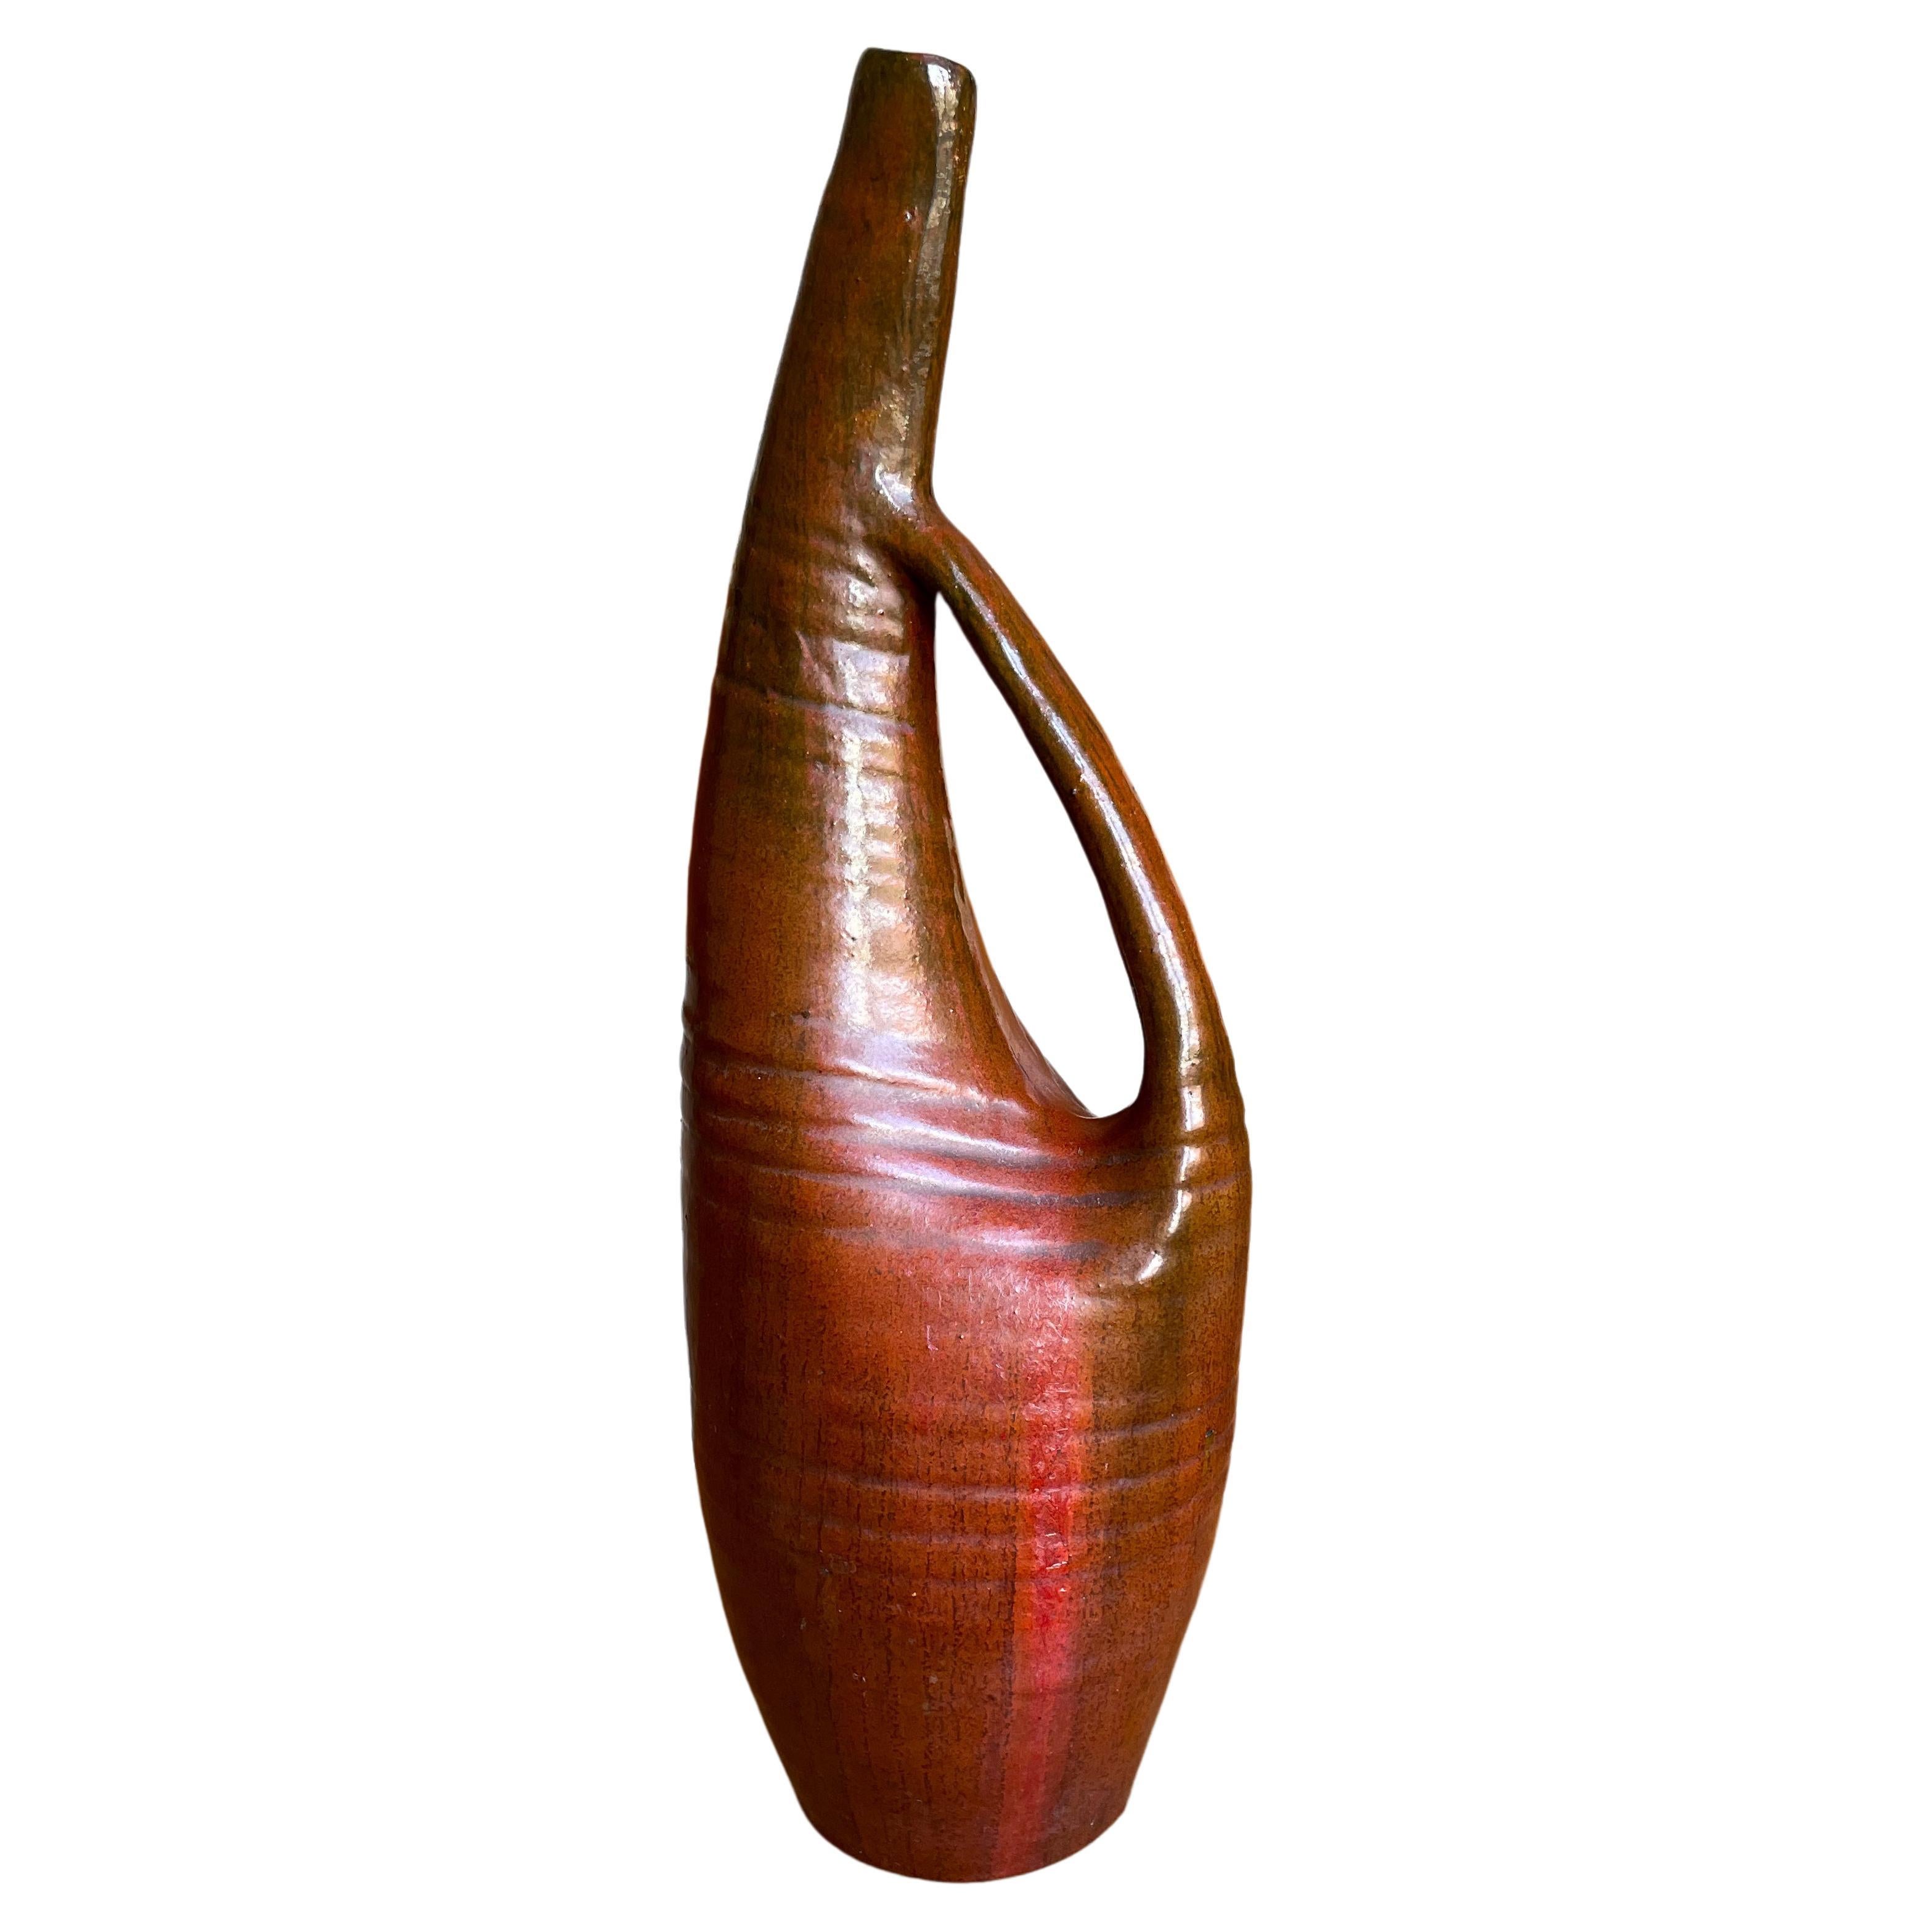 Tall Scandinavian ceramic art statement piece. Handmade organic modern asymmetrical sculptural textured bottle vase glazed in warm caramel brown, maroon and bright red colors. Curved neck, slender handle. Beautiful vintage condition. 
Scandinavia,